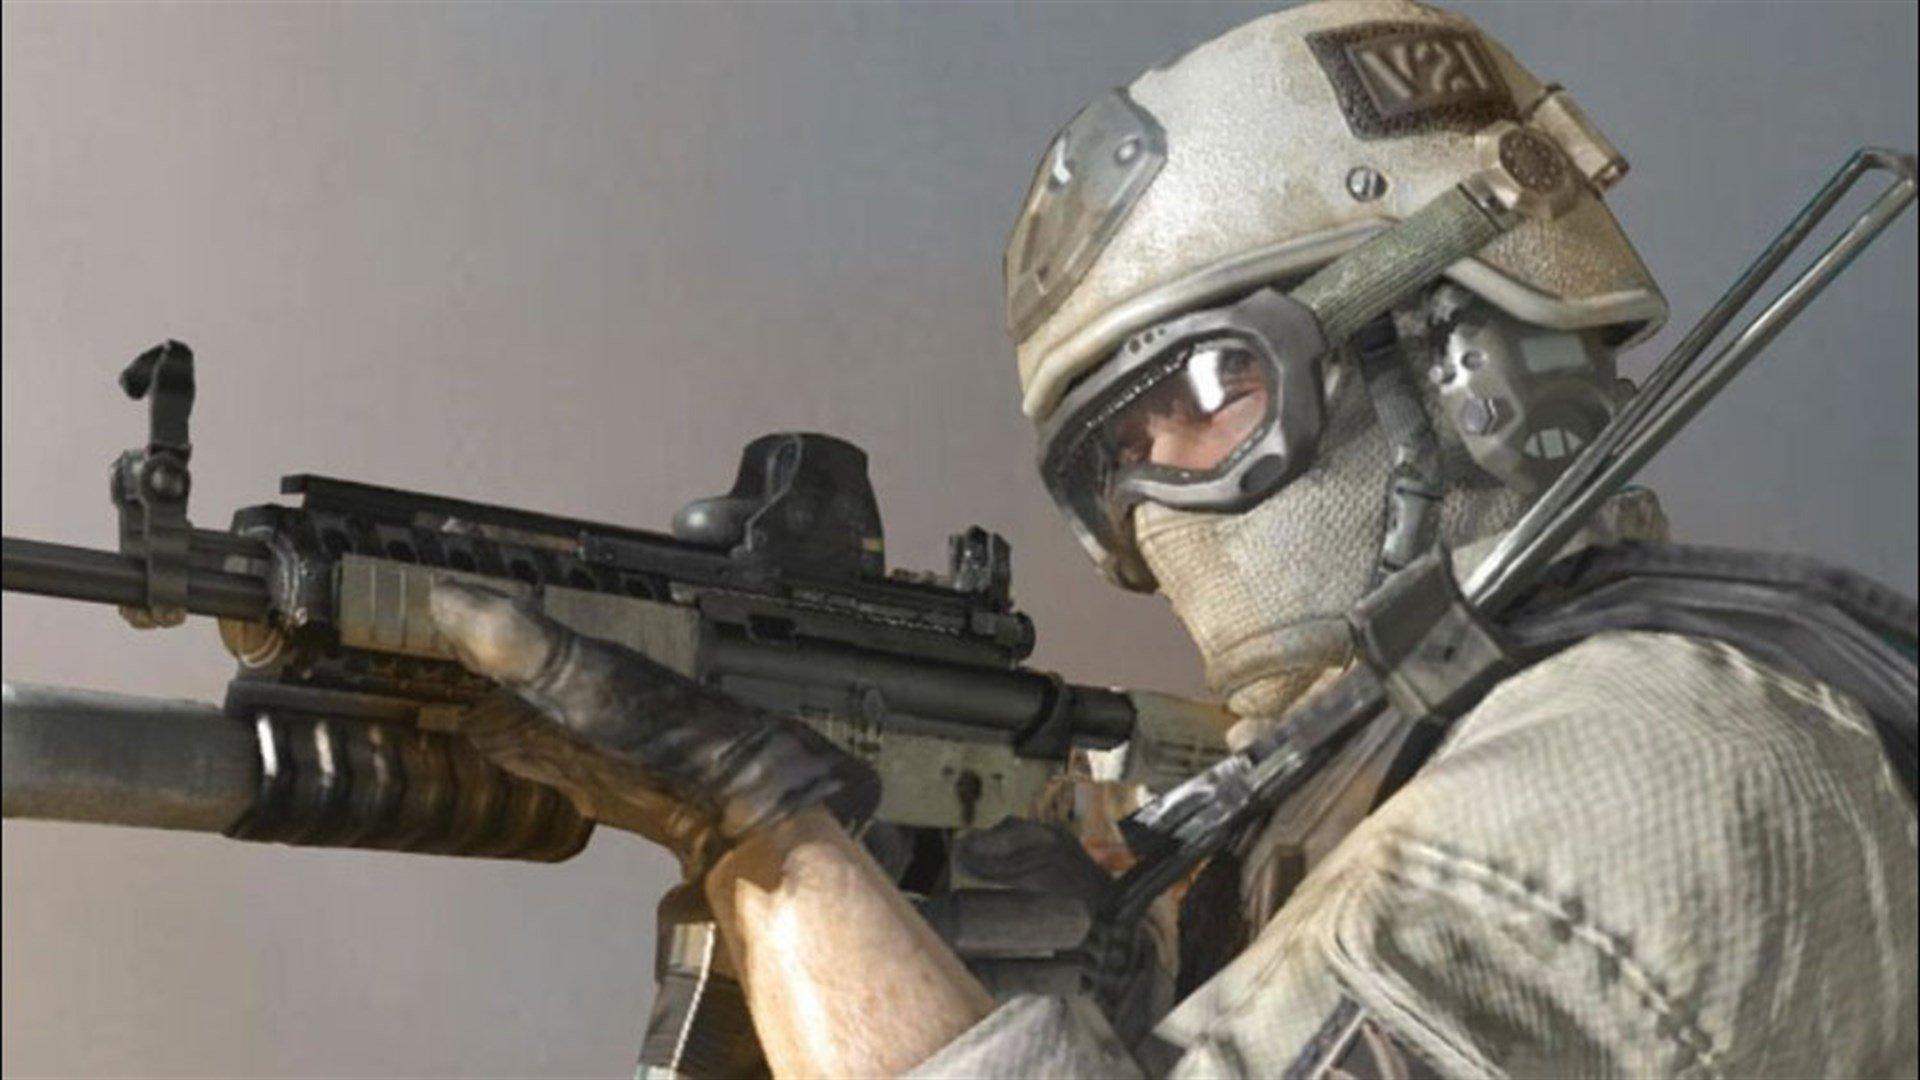 Call of Duty: Modern Warfare 2 (Microsoft Xbox 360, 2009) for sale